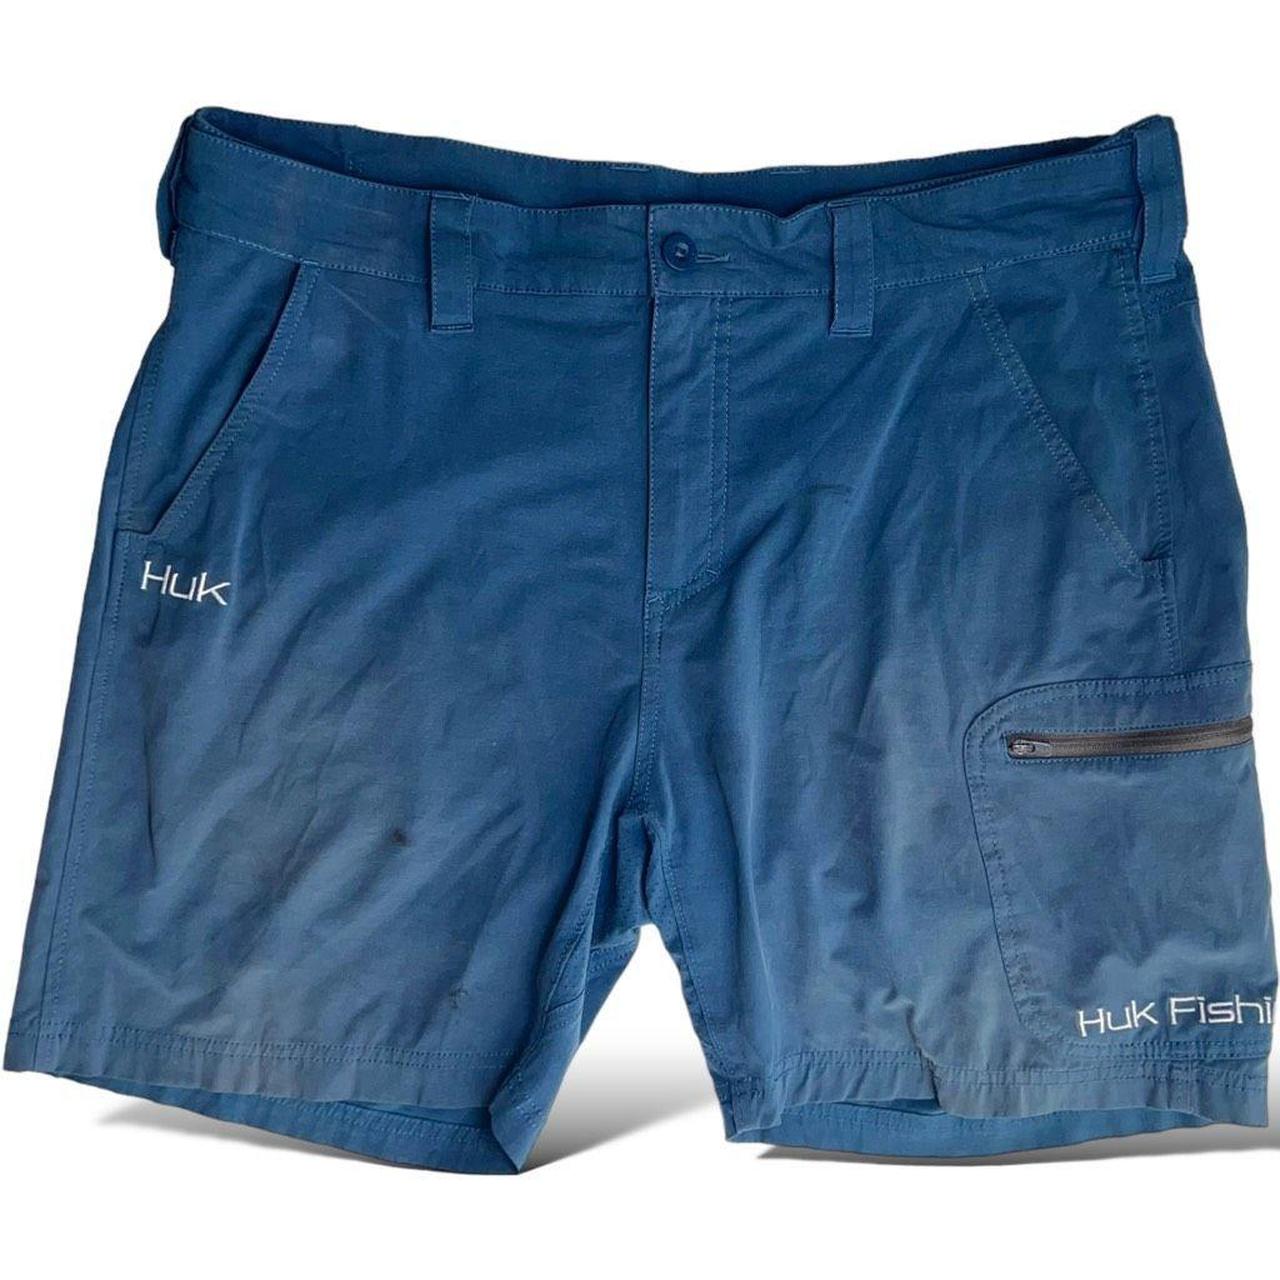 Huk Men's Performance Fishing Shorts, XL, Quick-Dry, - Depop